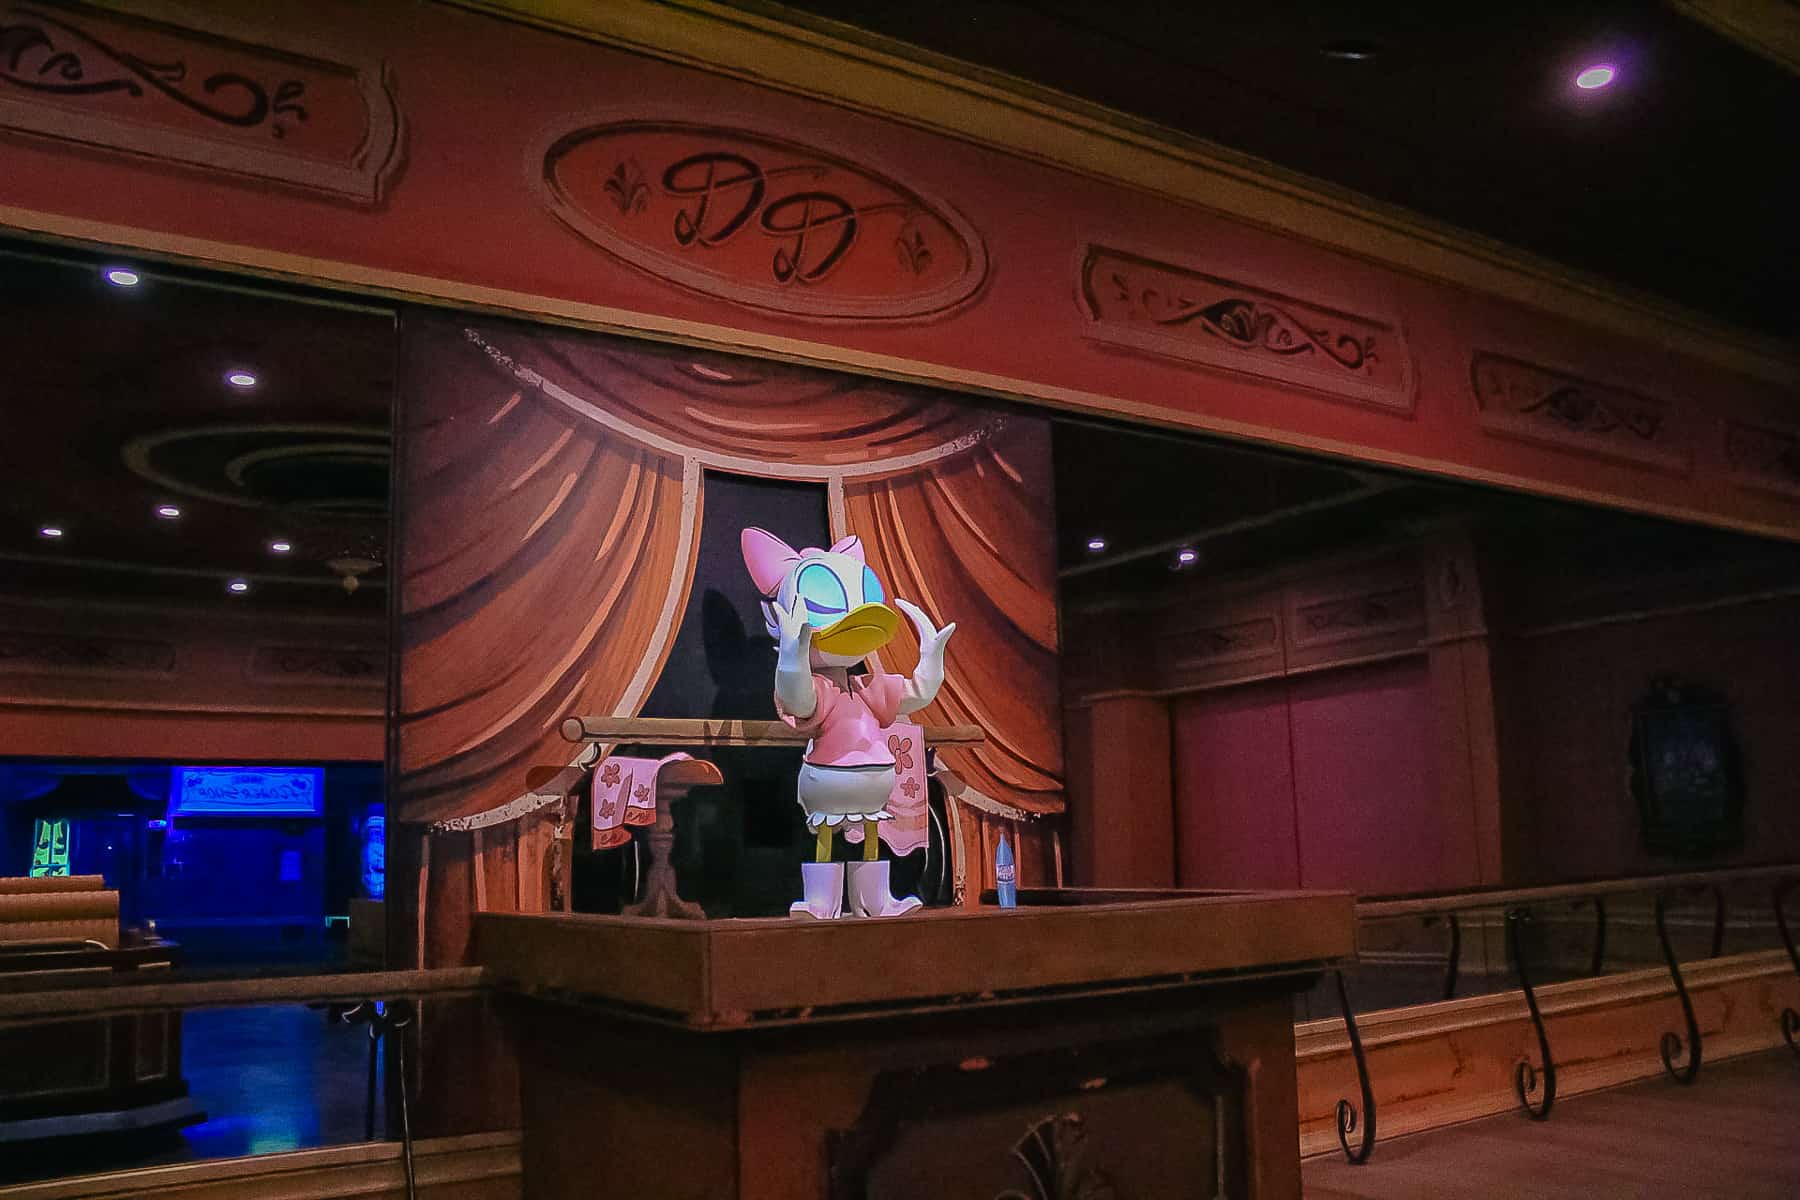 Scene where Daisy Duck is conducting a dance recital. 